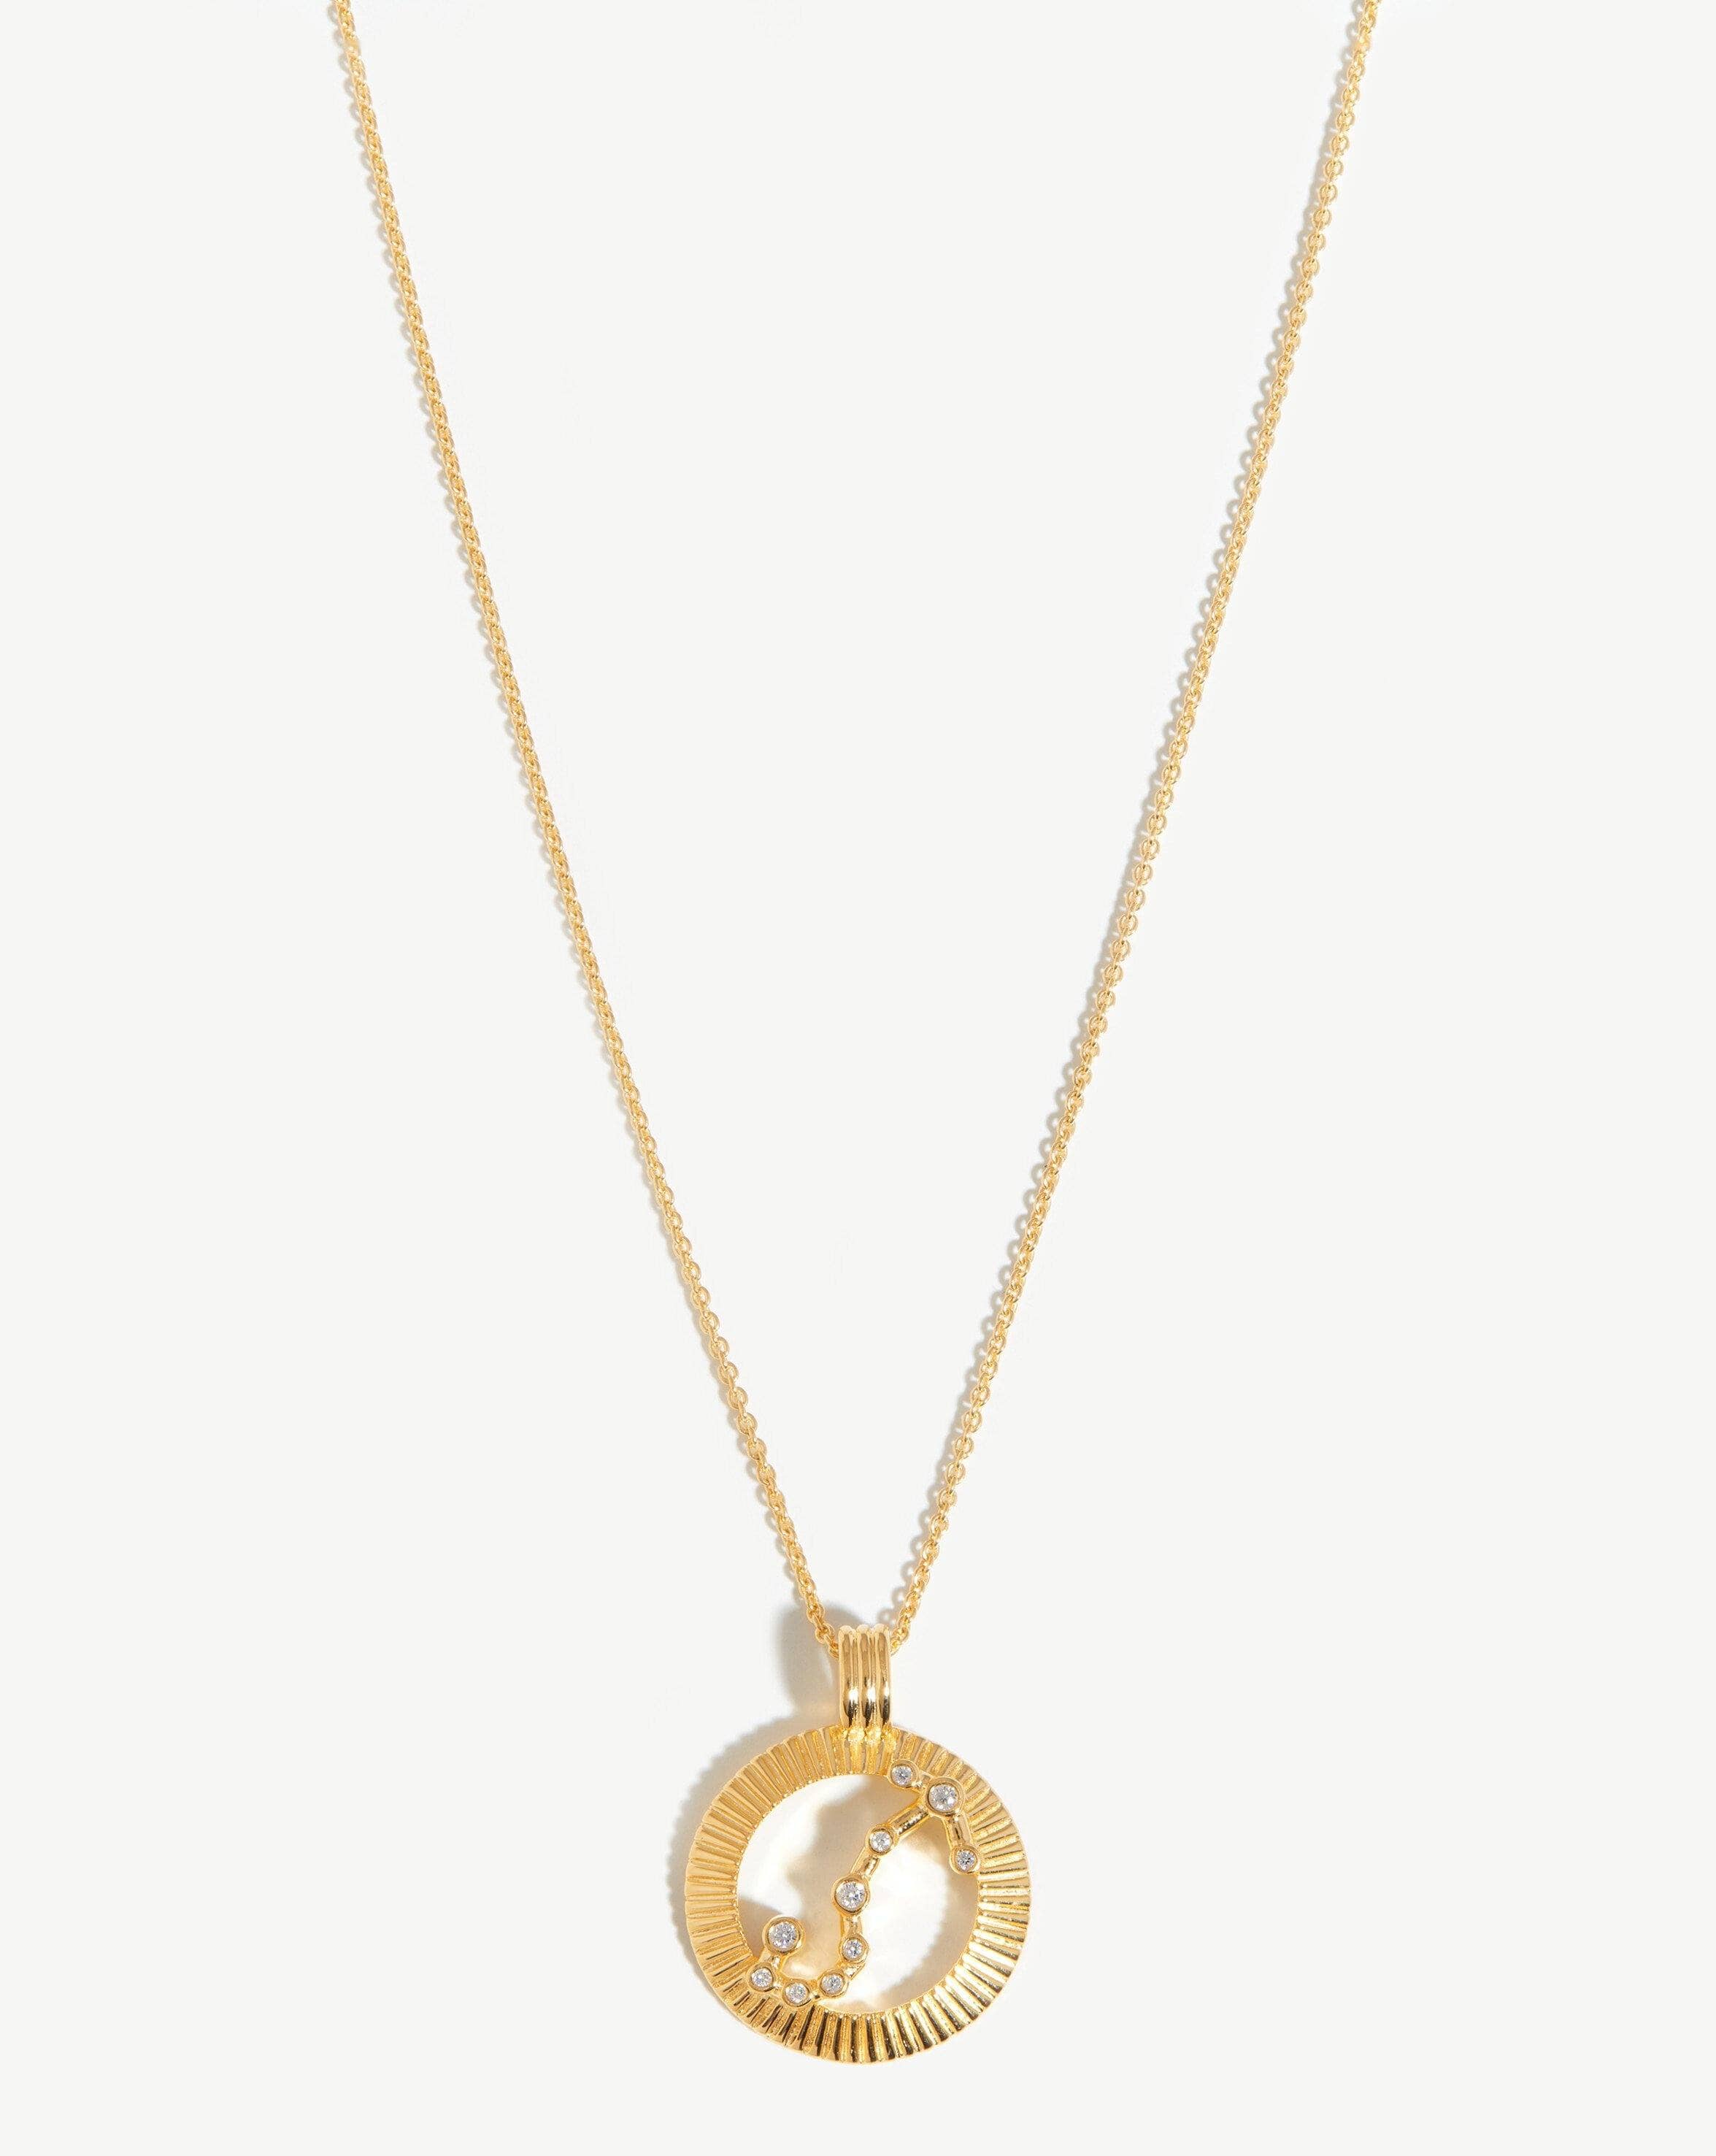 Zodiac Constellation Pendant Necklace - Scorpio | 18ct Gold Plated Vermeil/Scorpio Necklaces Missoma 